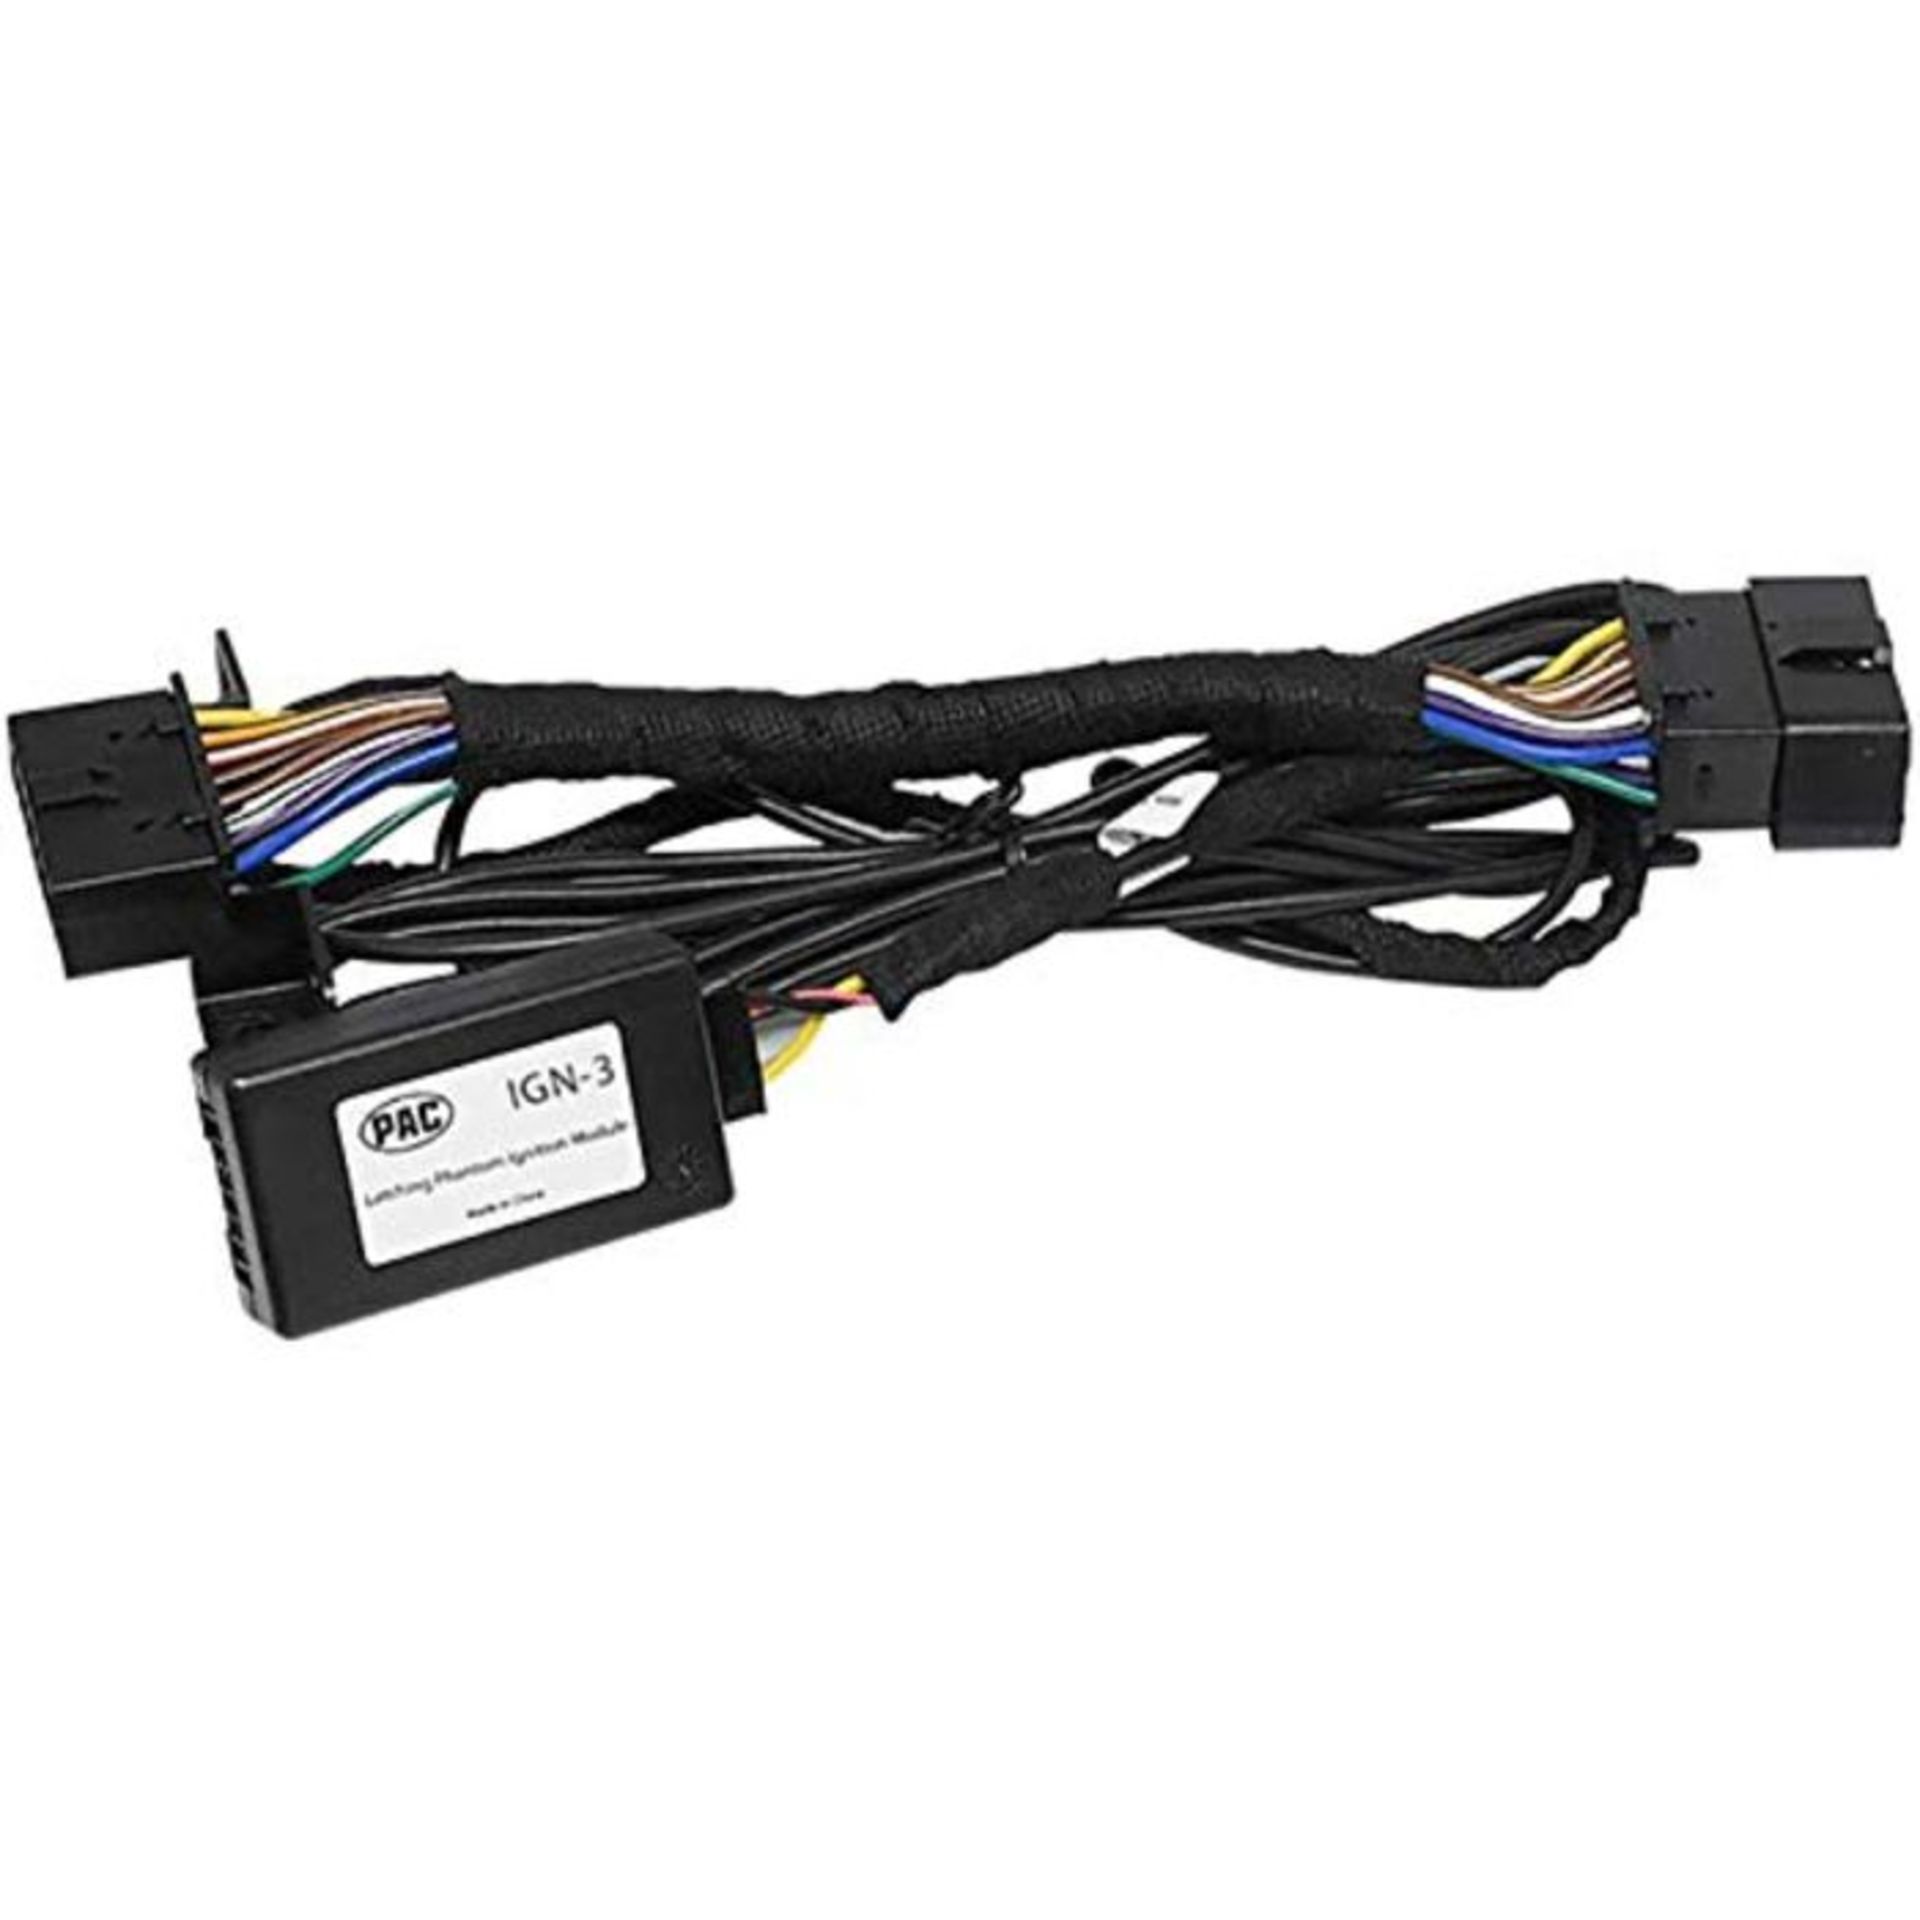 Thinkware OBD Installation Cable for Use On U1000, Q800pro, F800pro, F770, X700, F200,